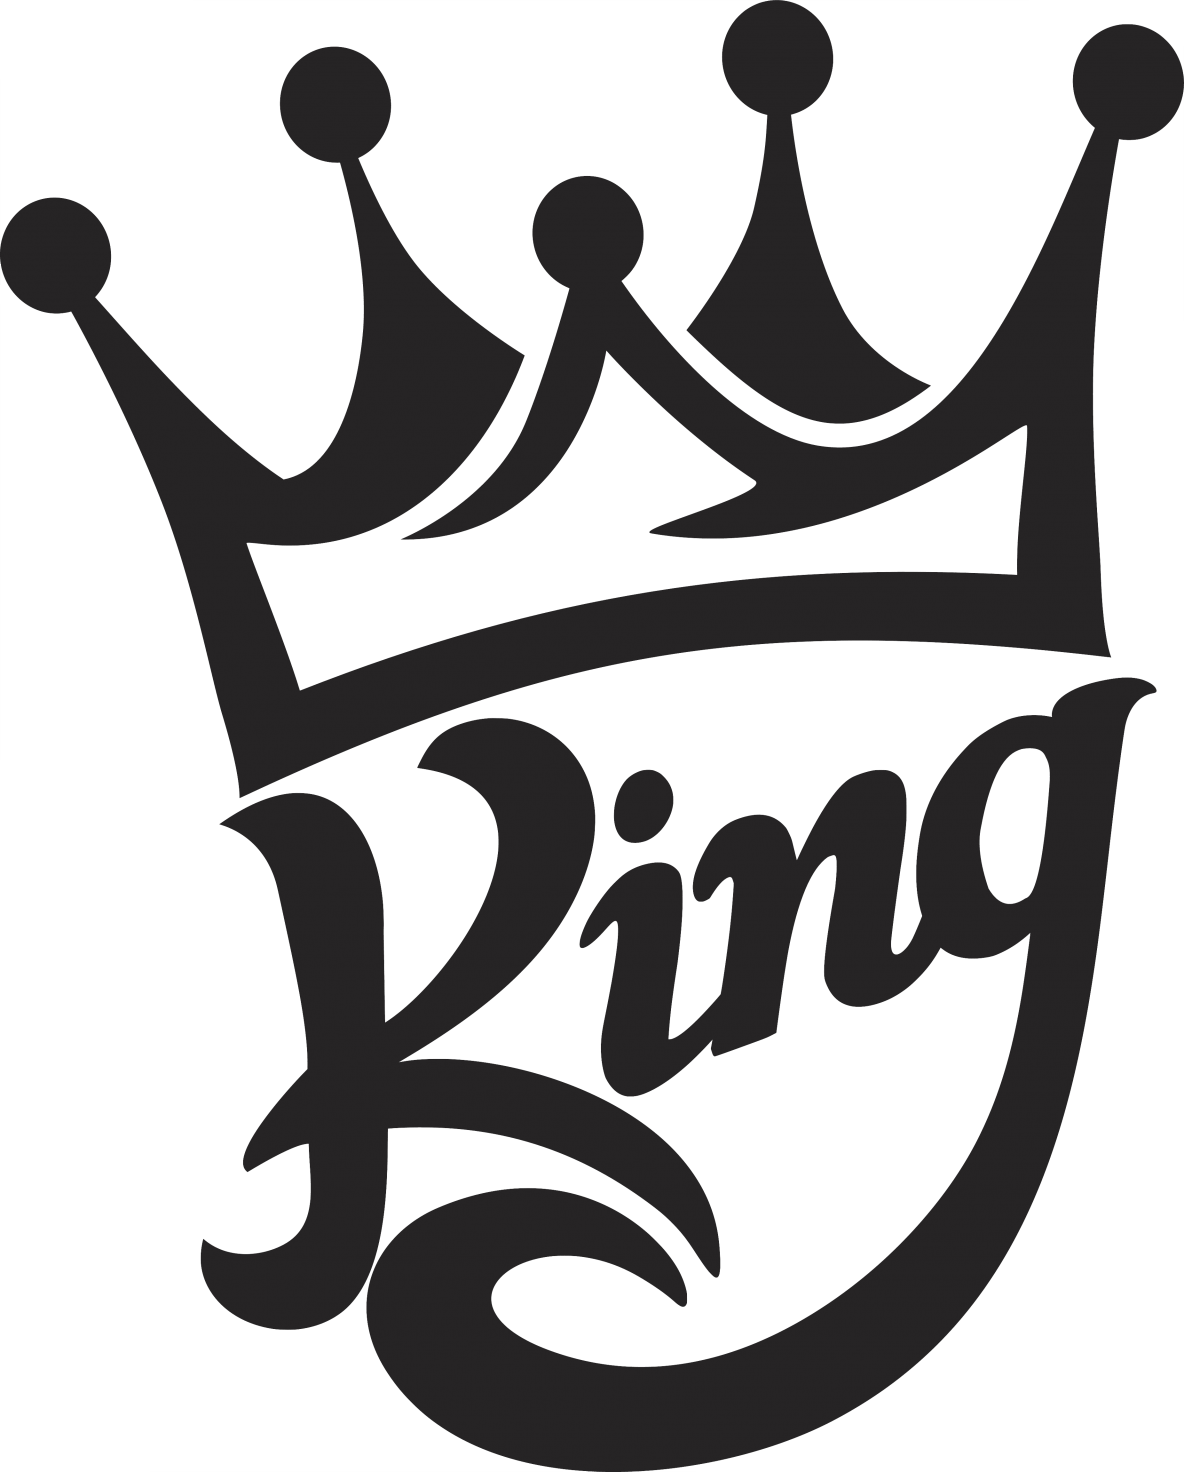 Download PNG image - King Crown PNG File 